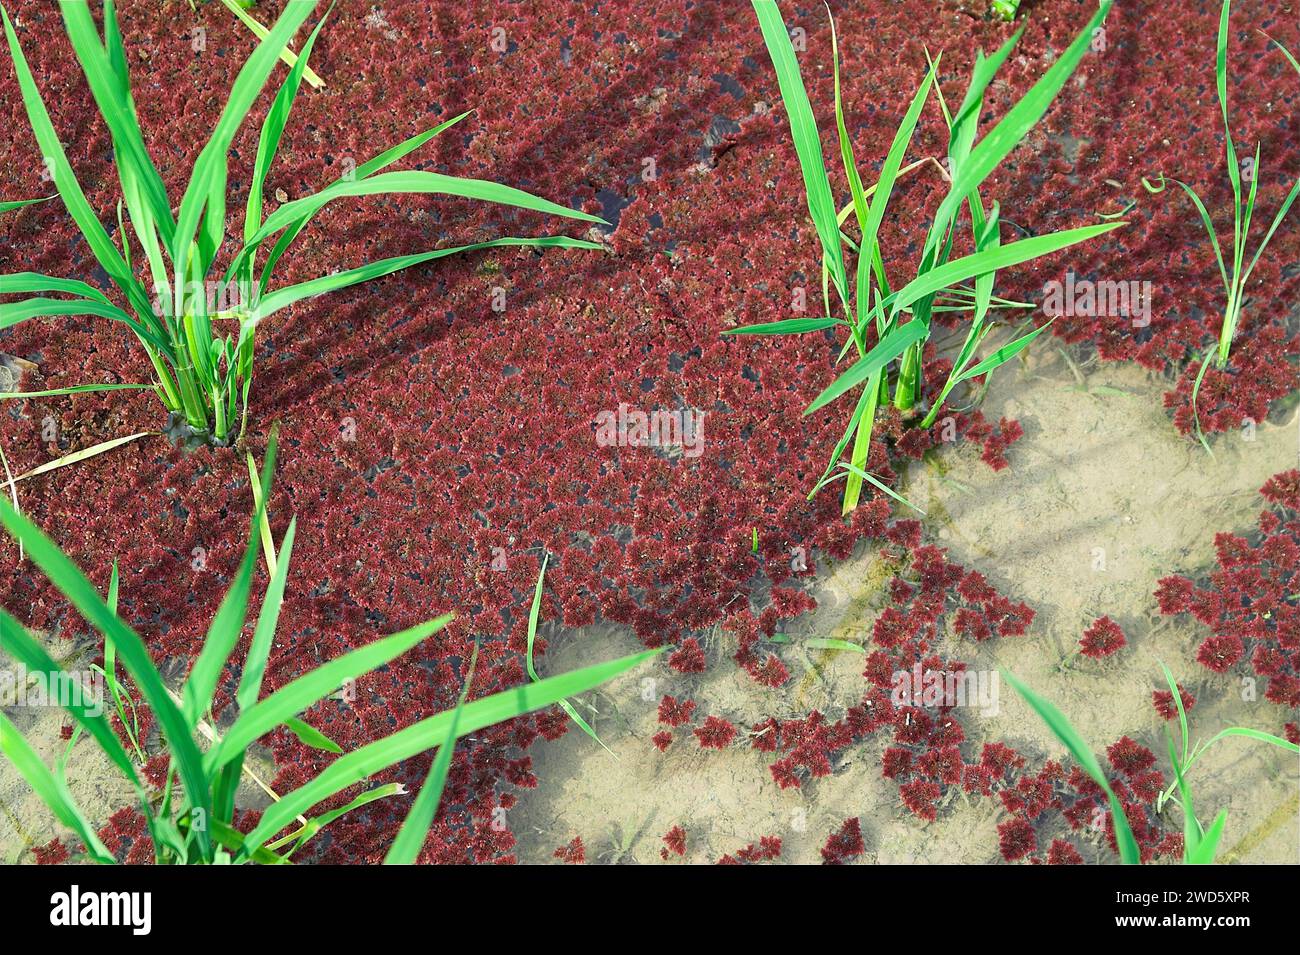 龙胜镇 (龙胜县) 中國 Longsheng, Dazhai Longji Ping'an Zhuang, China; rice seedlings growing in water; Reissetzlinge wachsen im Wasser, sadzonki ryż; Oryza L. Stock Photo